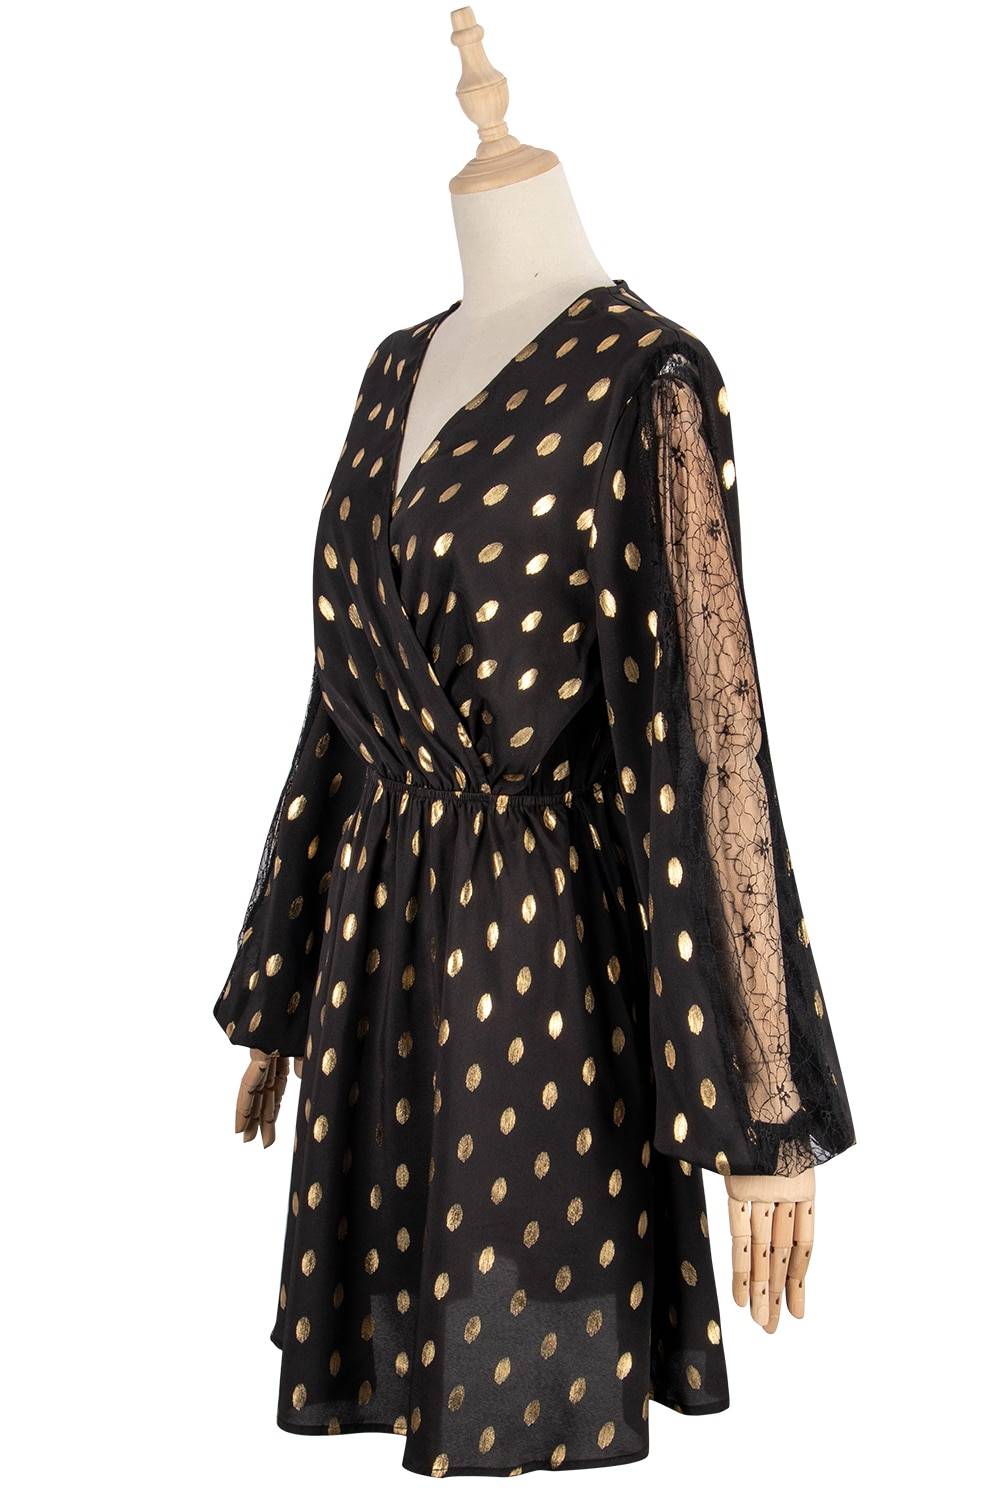 Sequin long sleeve lace glitter black short dress